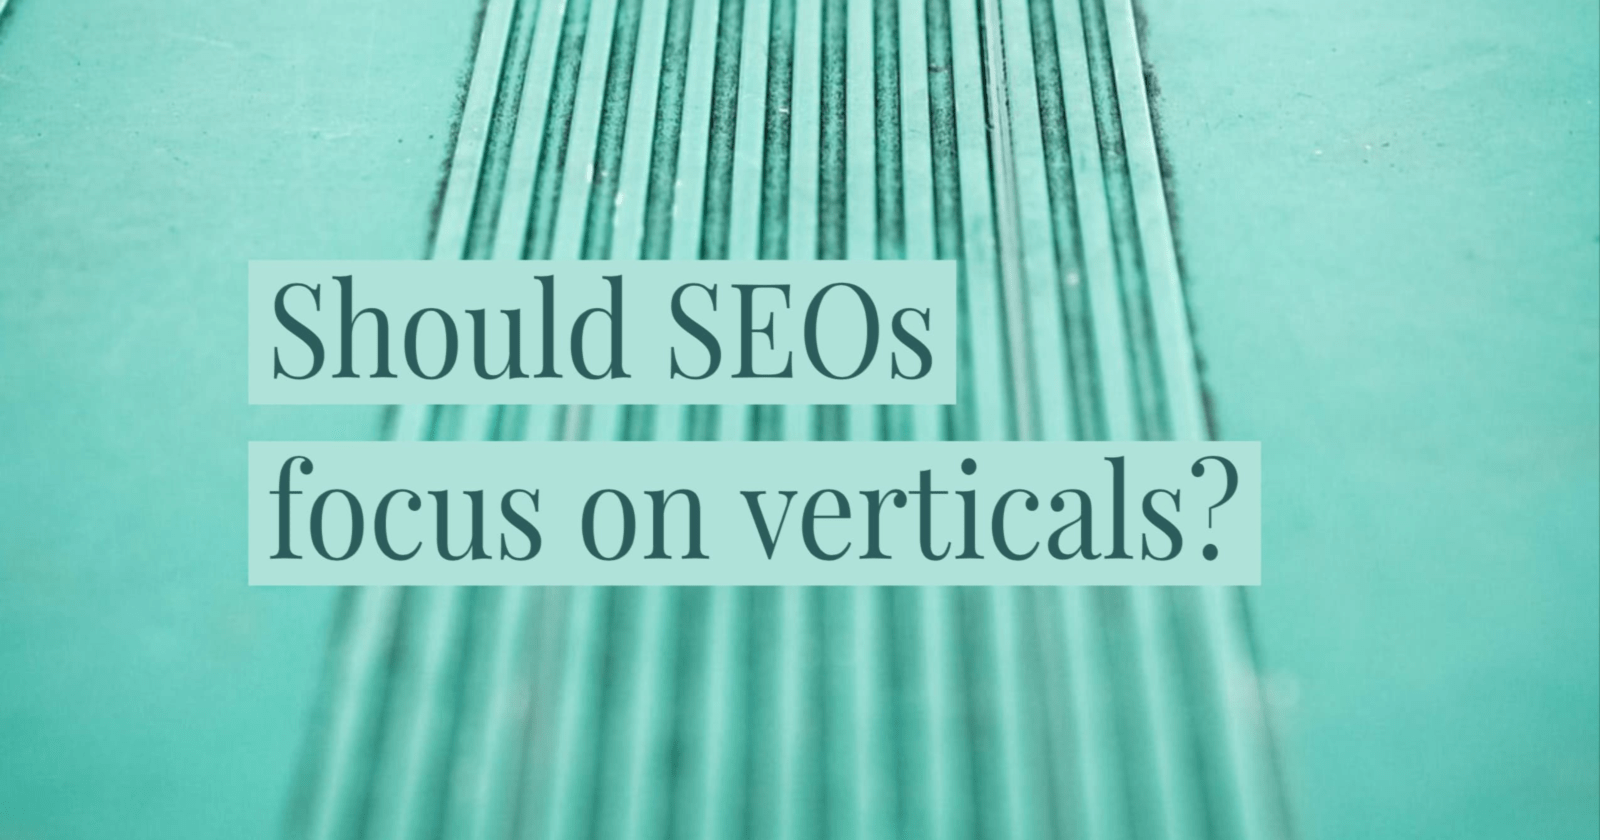 Should SEOs focus on verticals